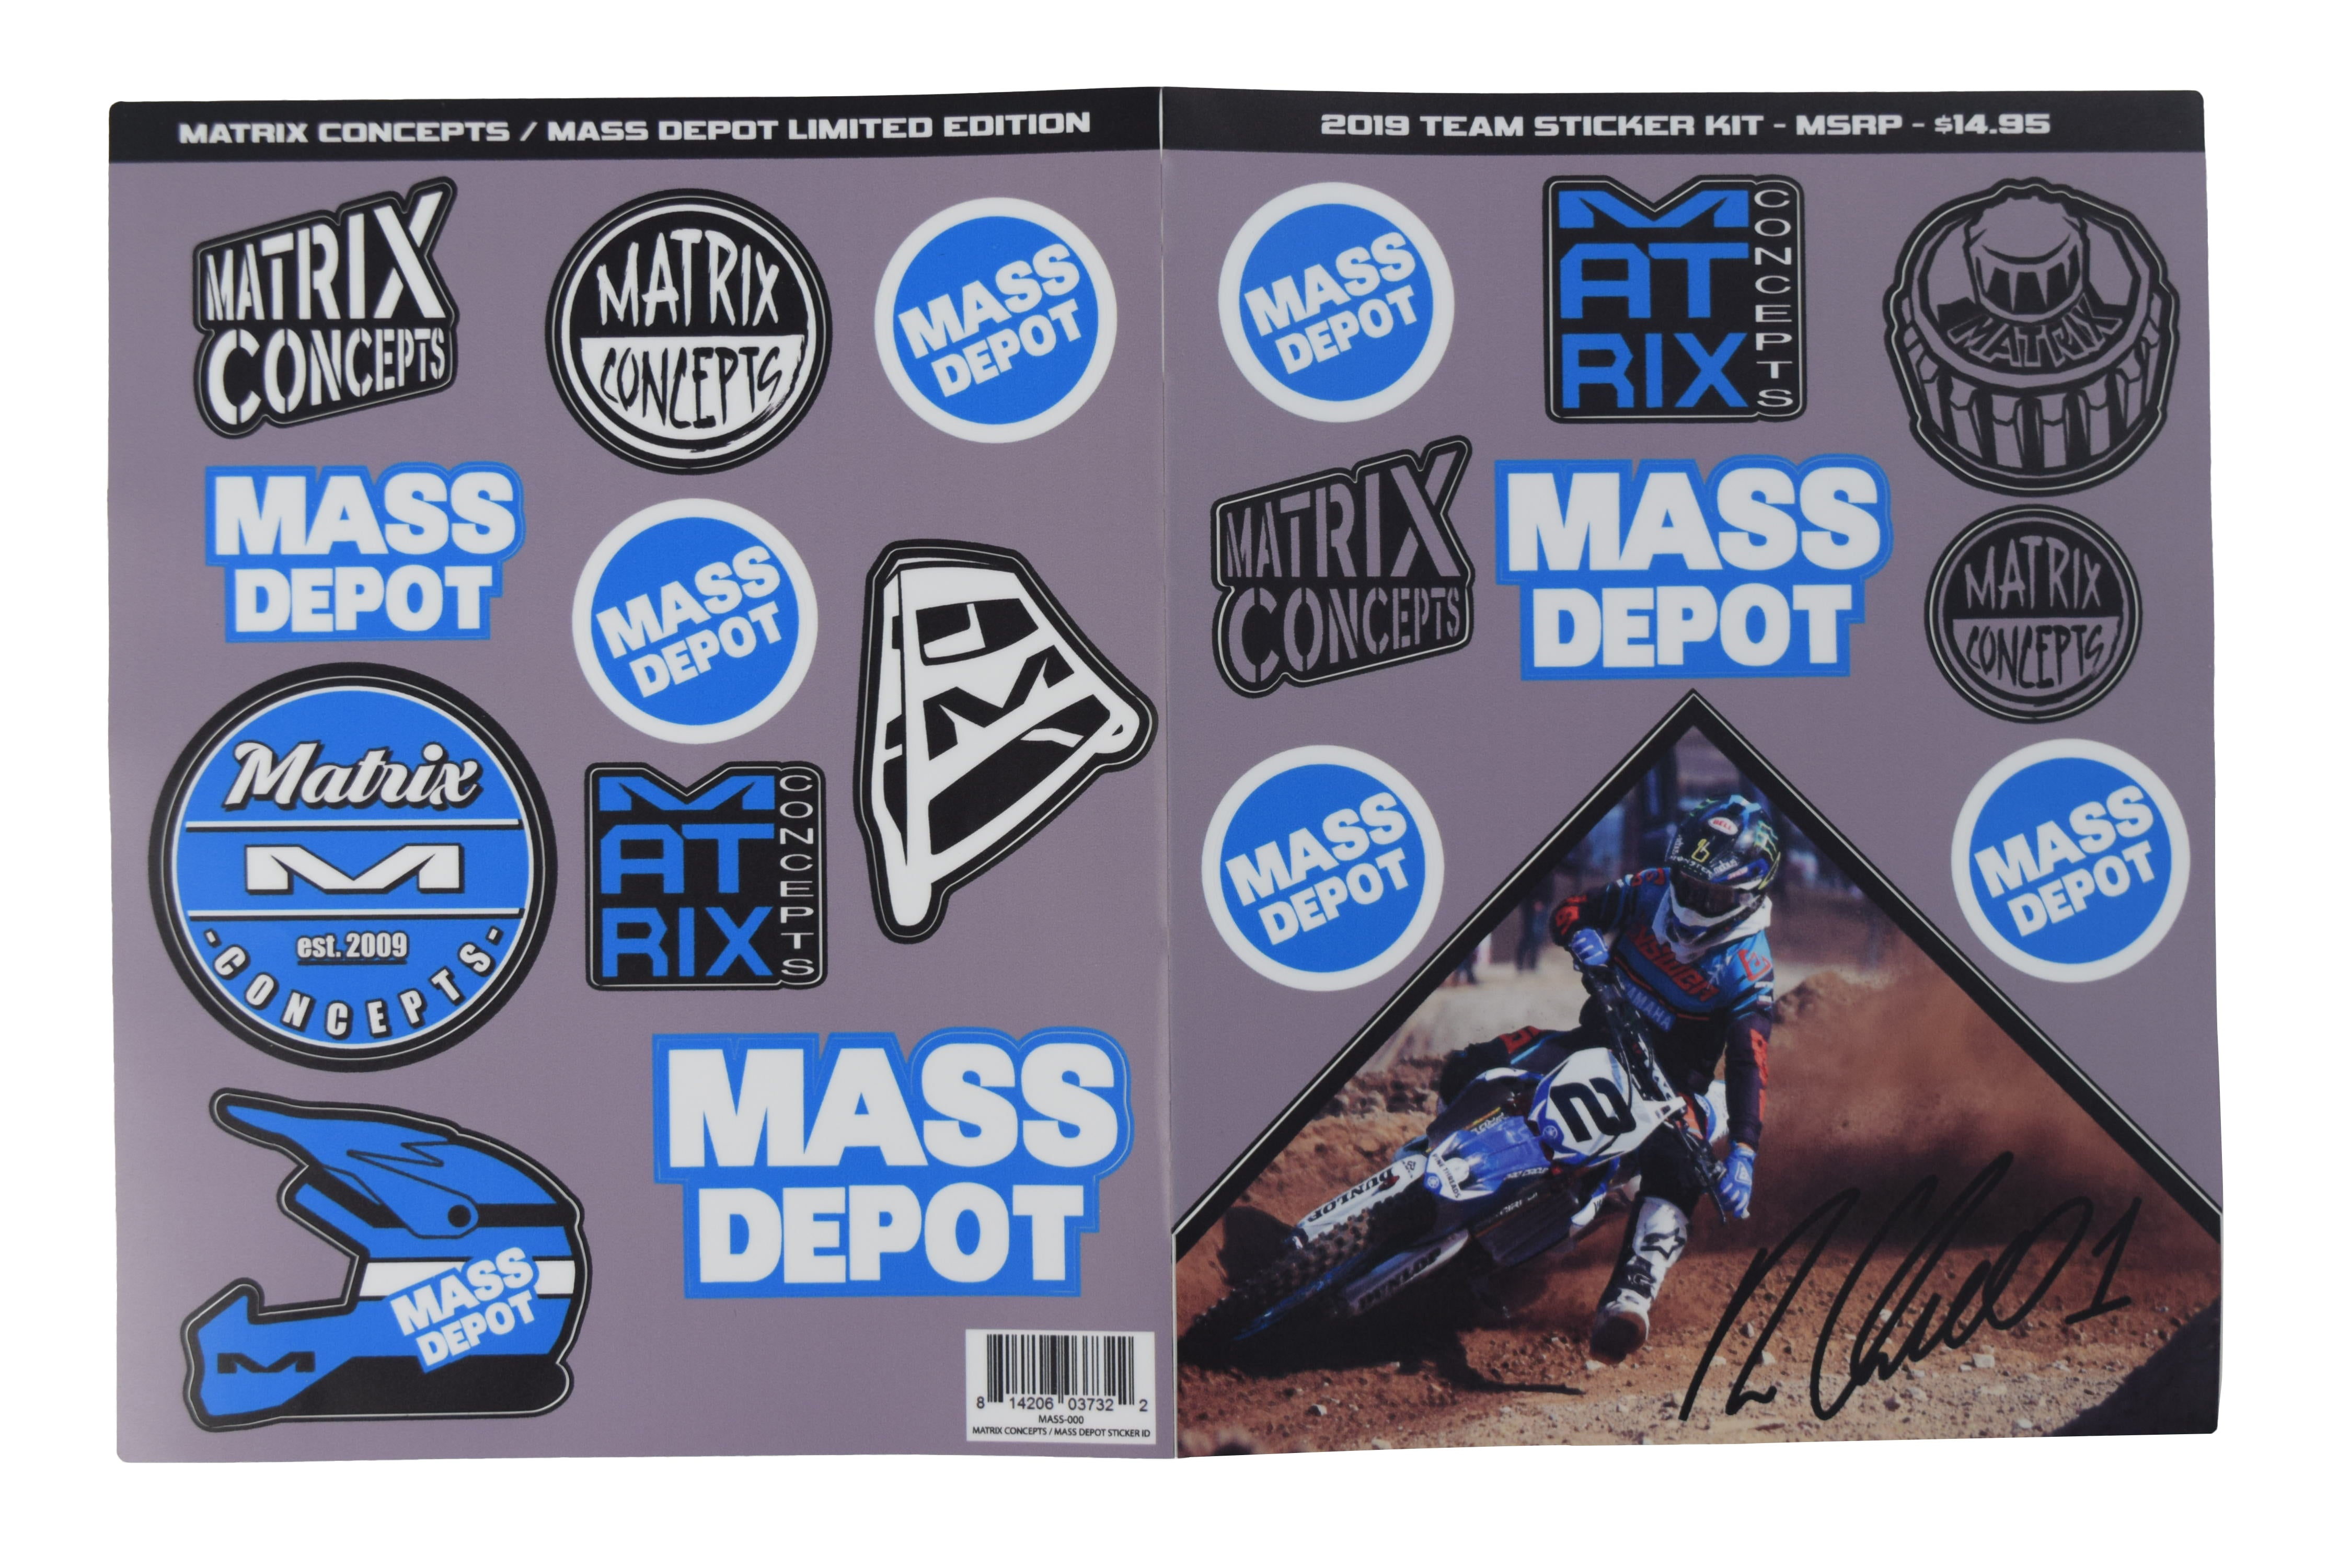 Matrix-Concepts-M64-ELITE-STAND-GREEN-with-Matrix-Mass-Depot-Sticker-Pack-image-7